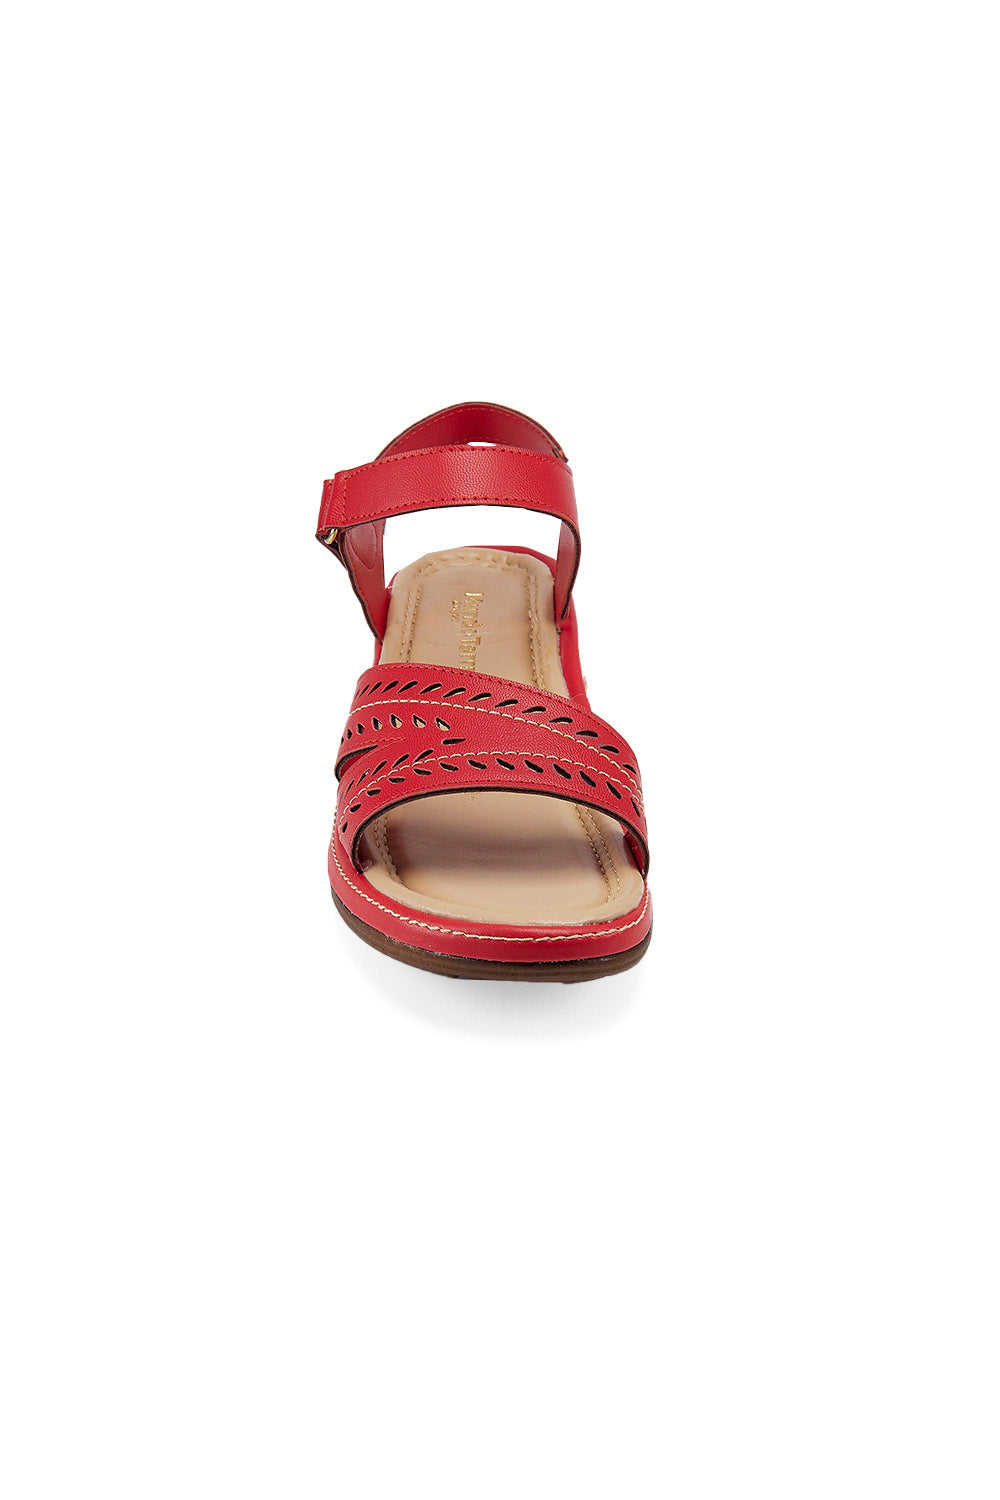 Sandalias Color Rojo Para Dama Mundo Terra